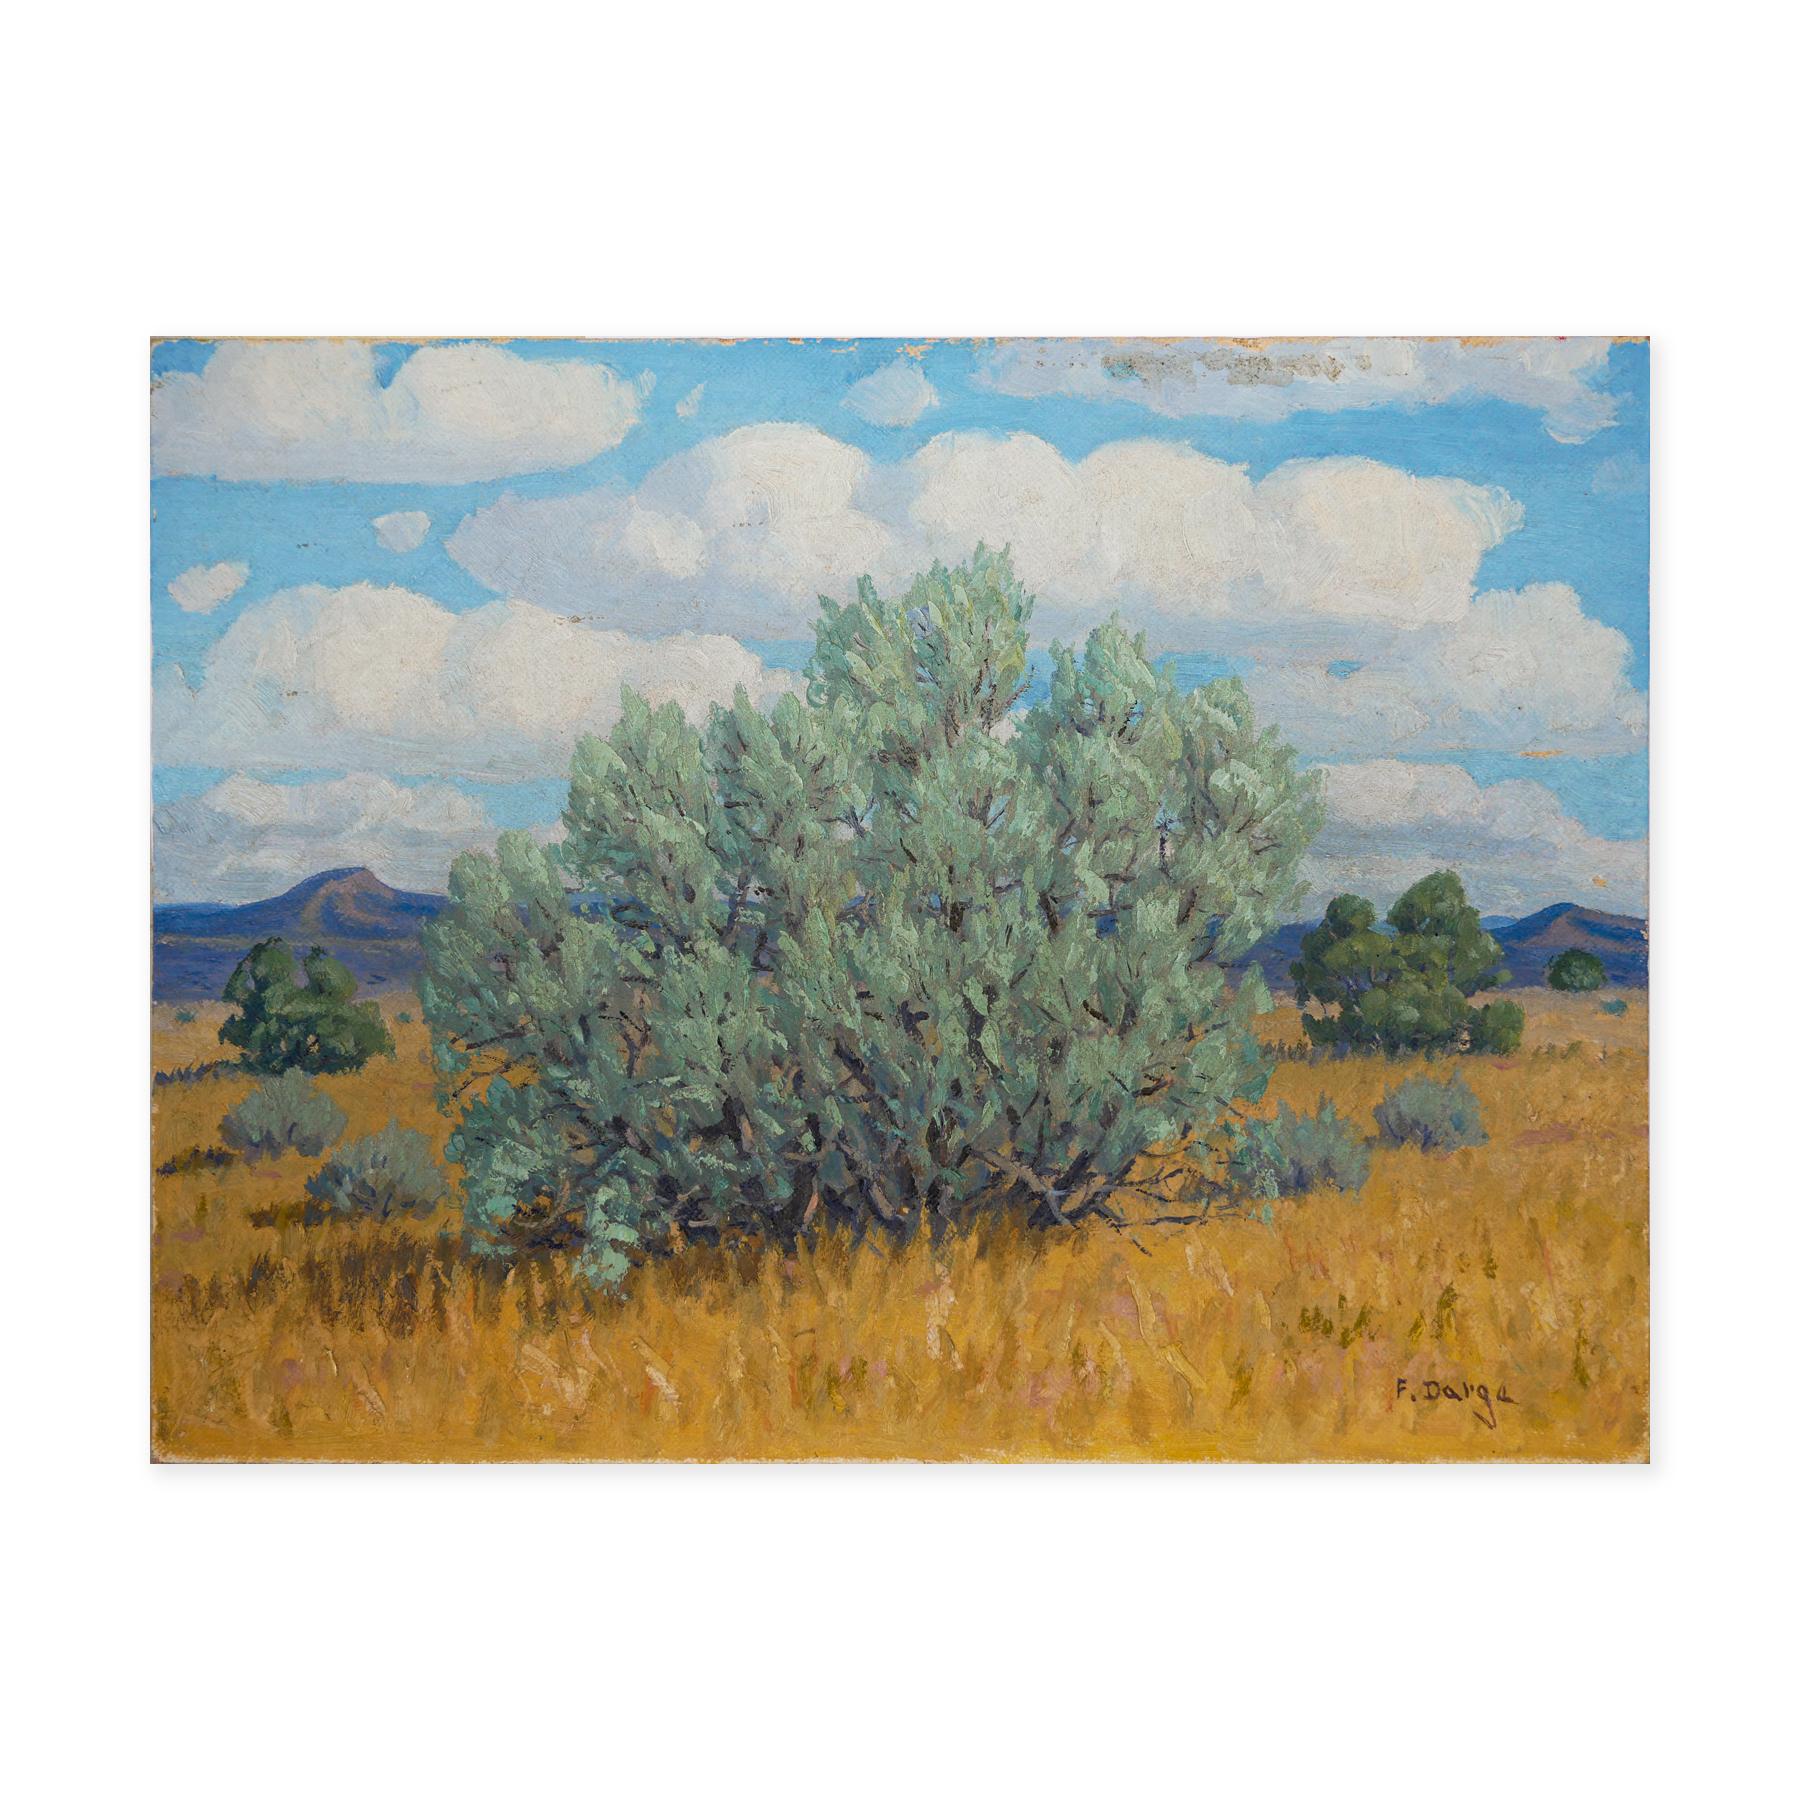 Paysage impressionniste abstrait du désert occidental vert, jaune et bleu - Painting de Fred Darge